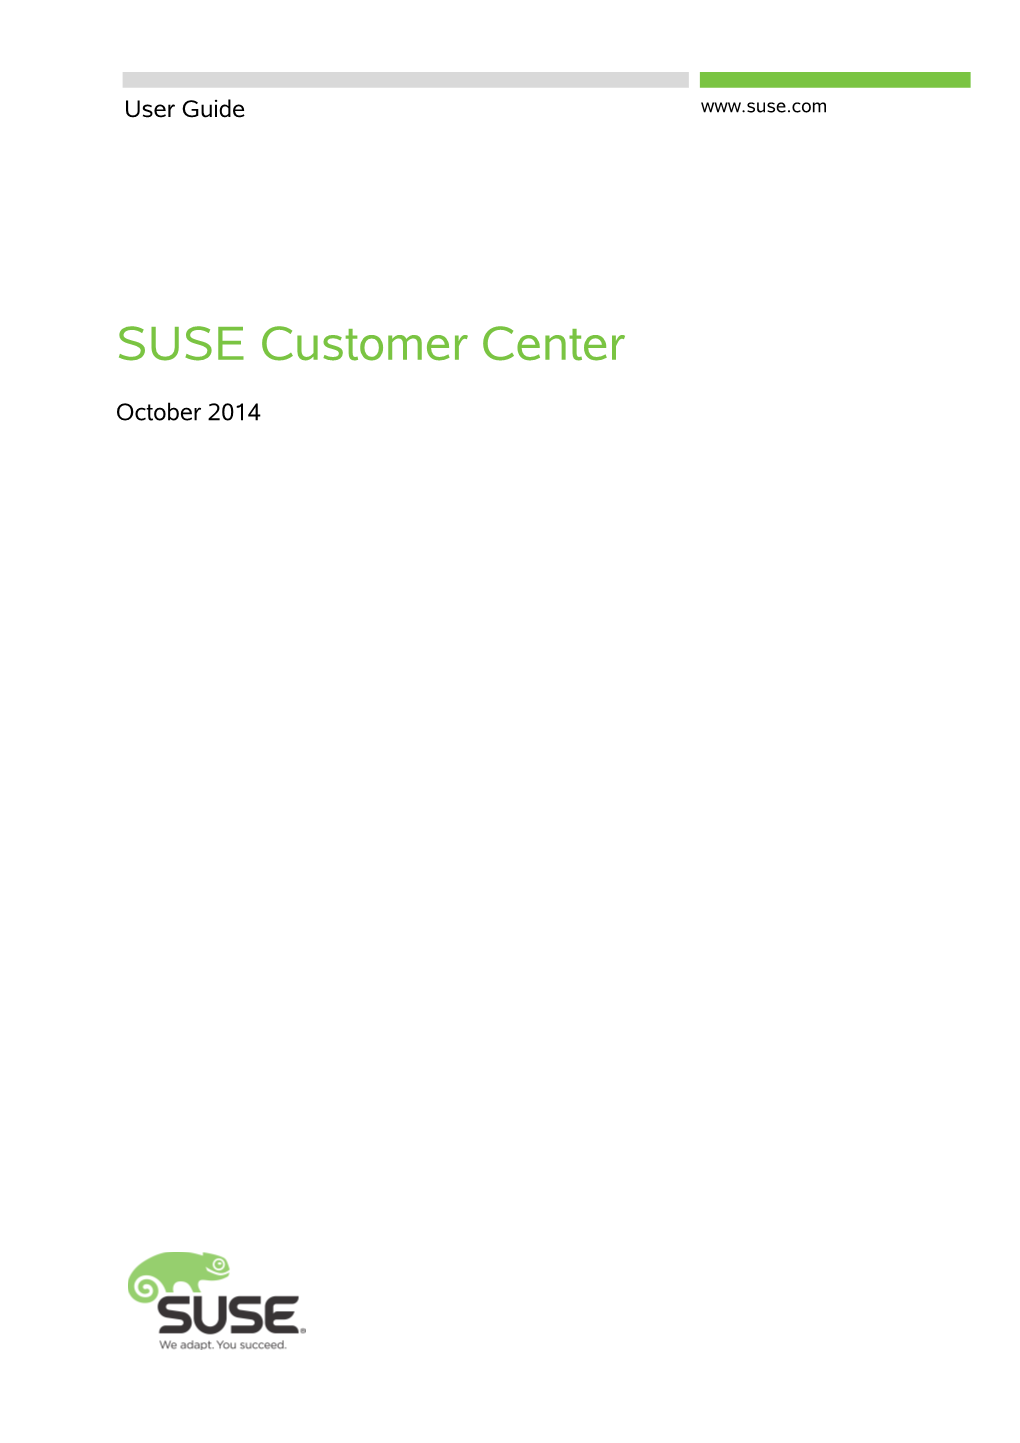 SUSE Customer Center